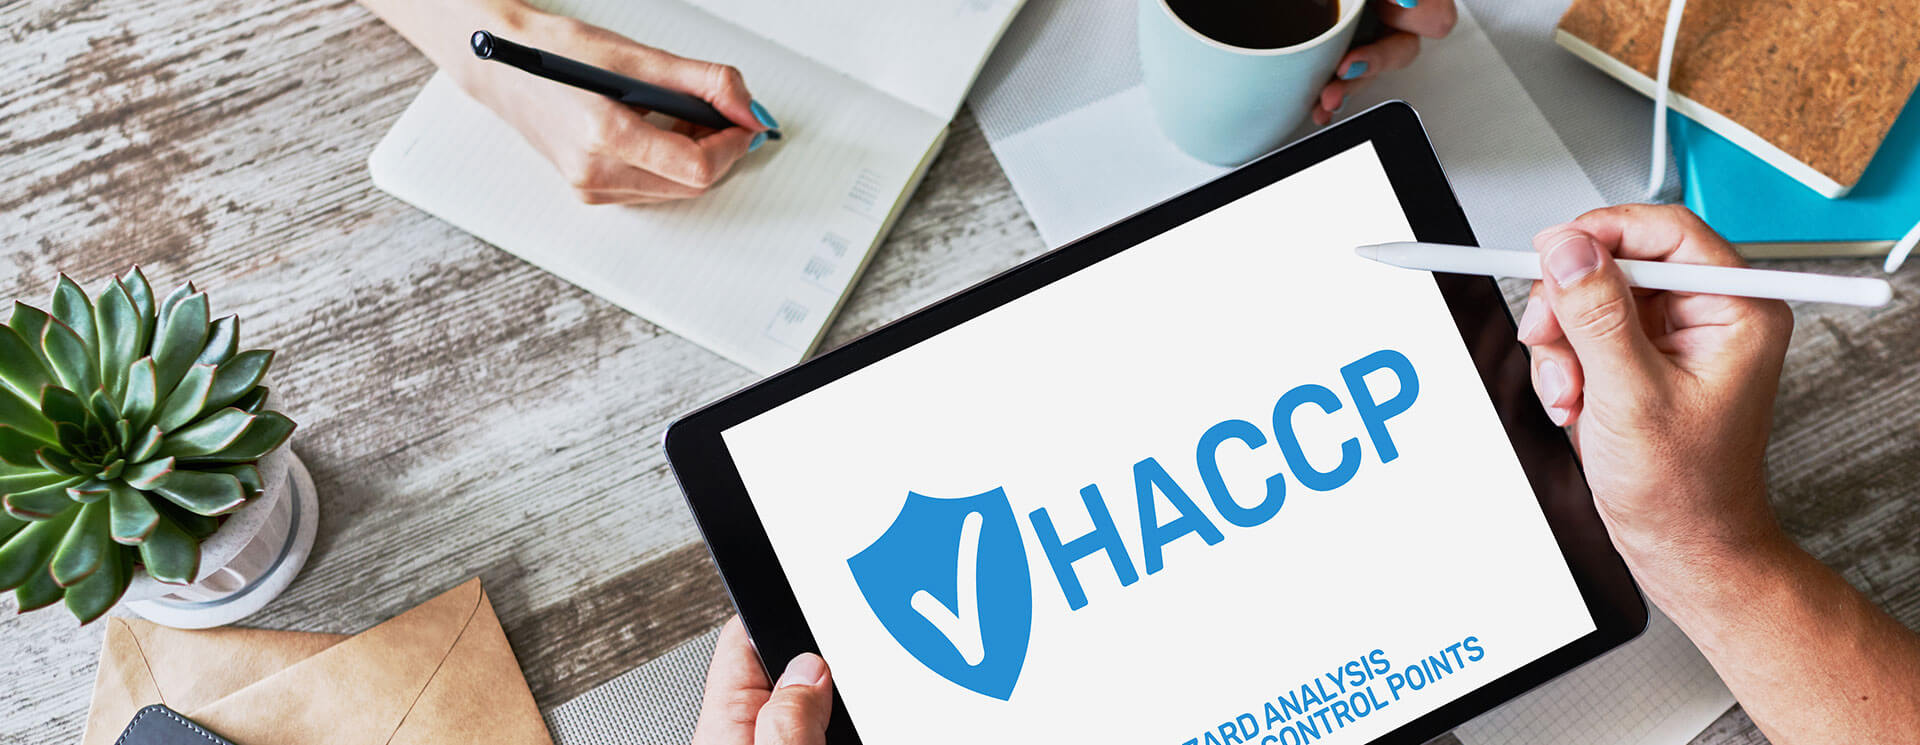 HACCP Konzept – was versteht man darunter?